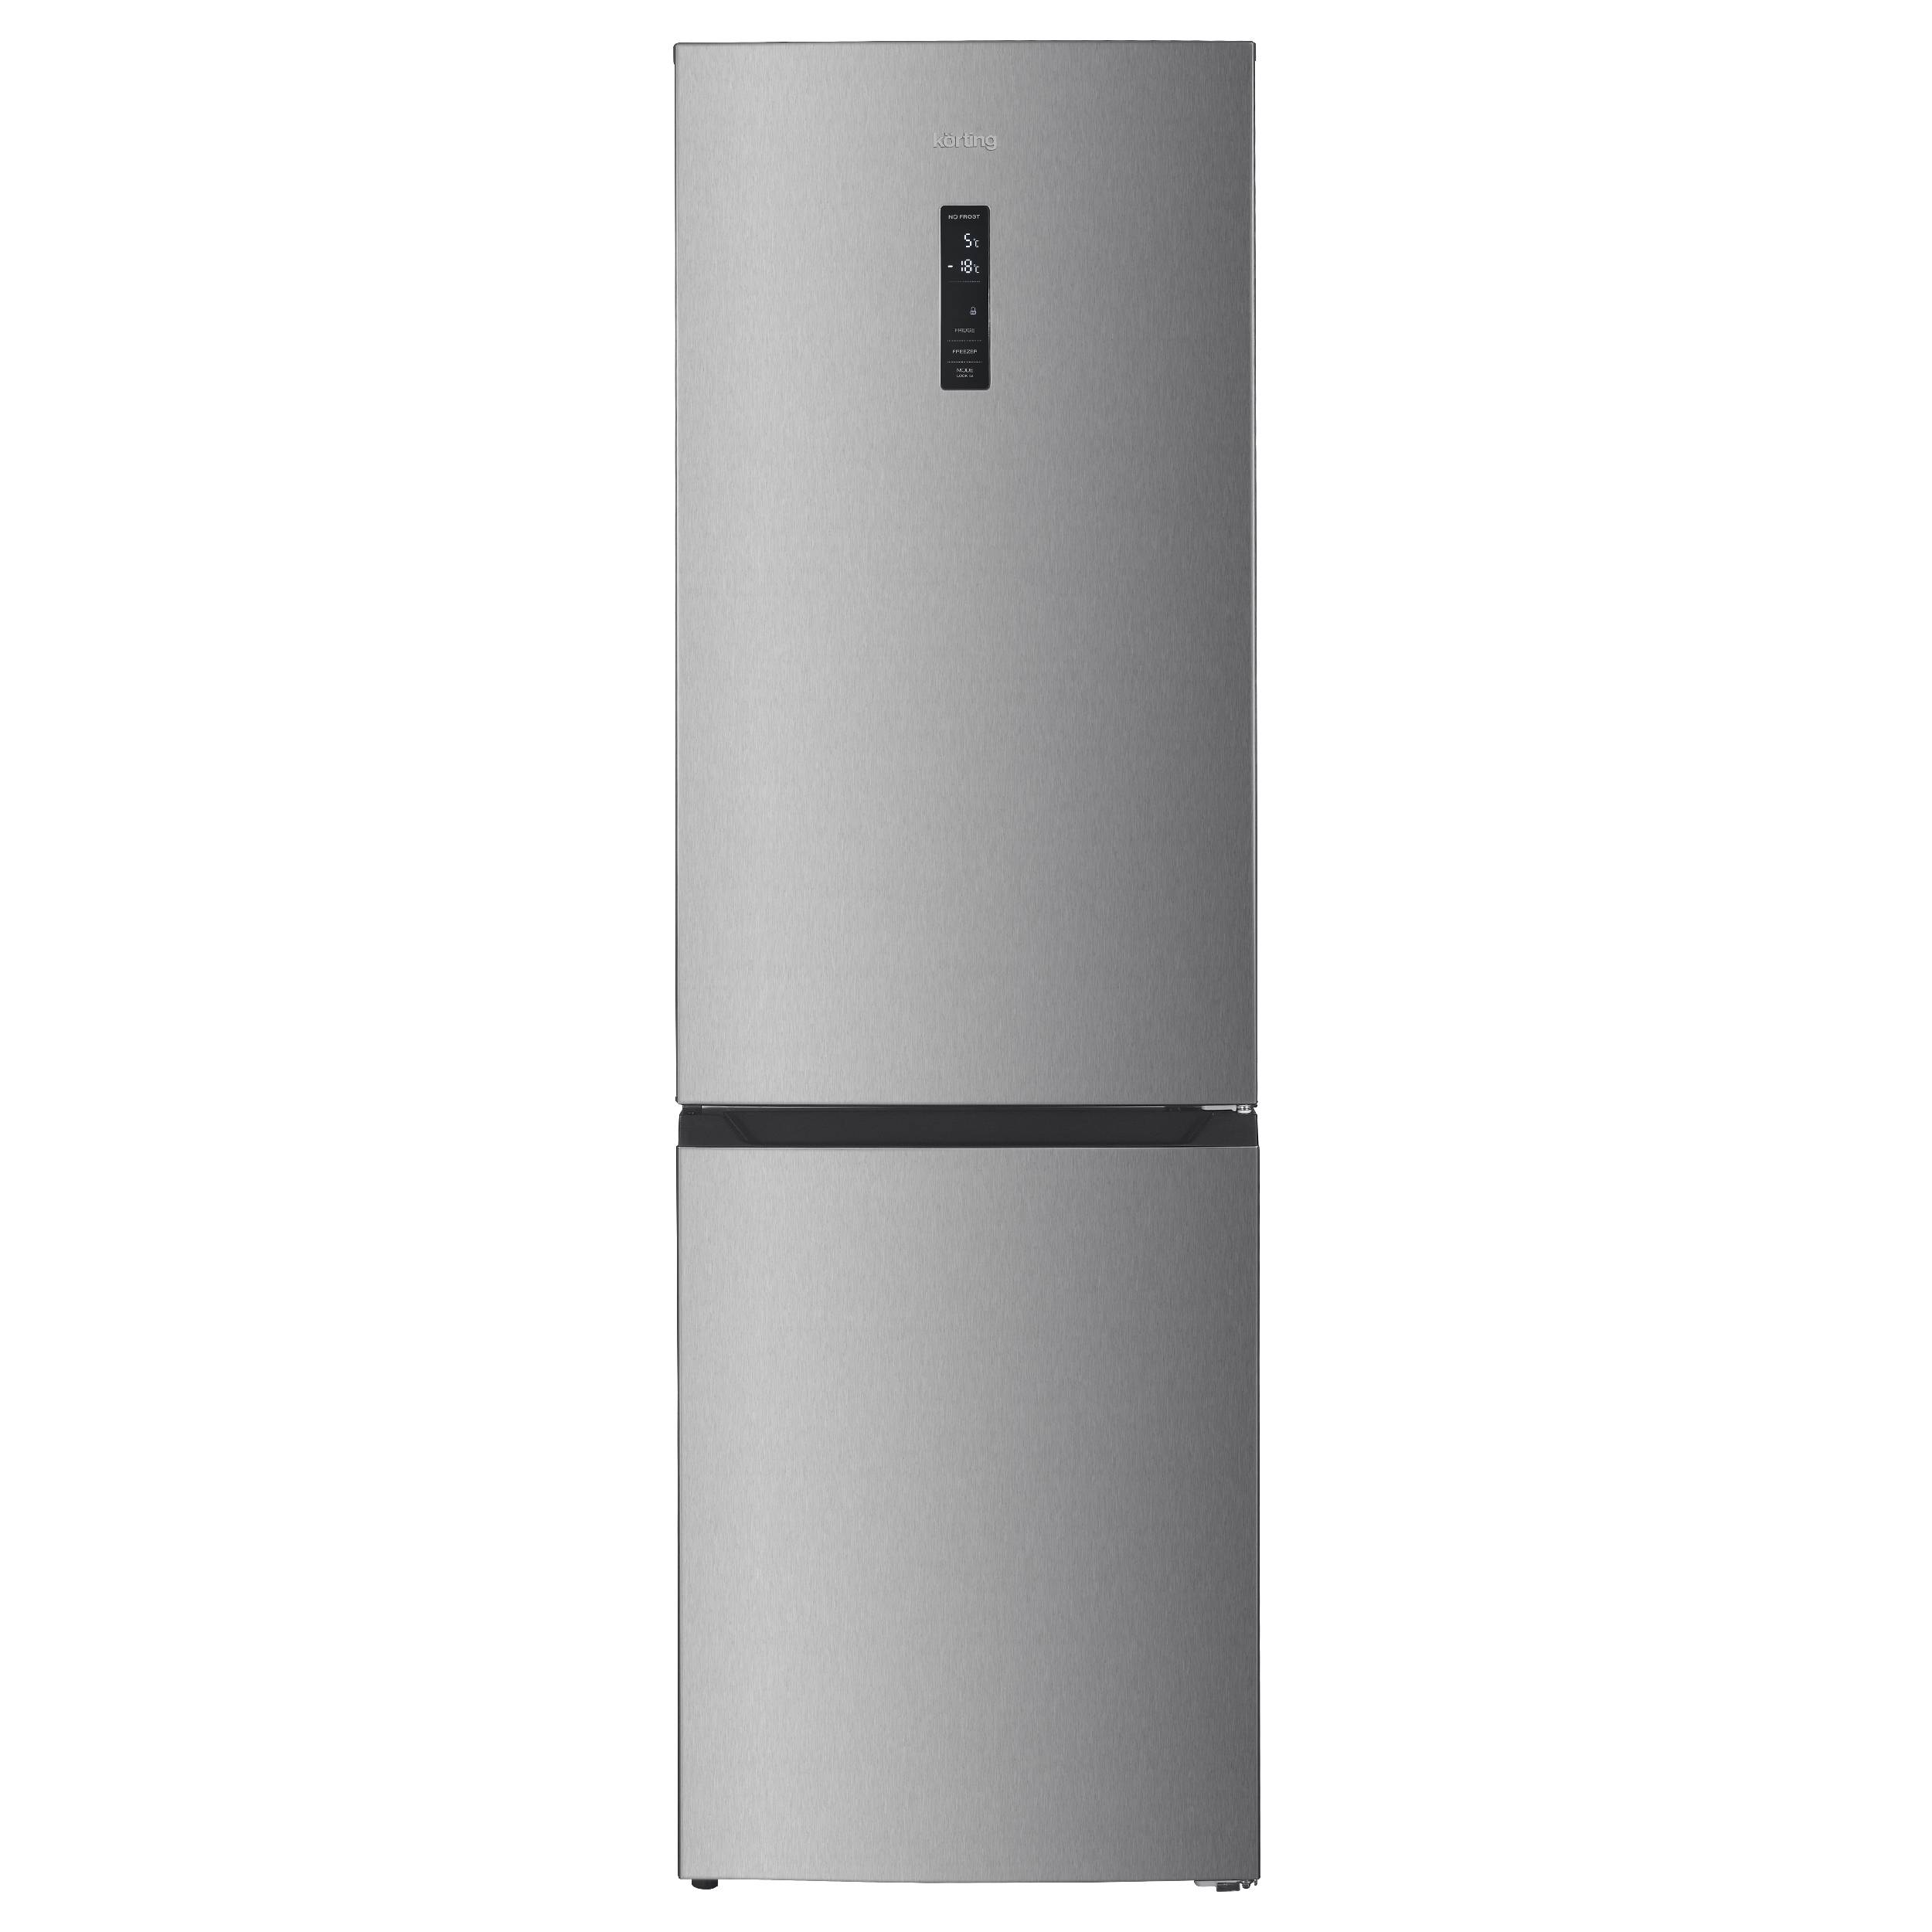 Холодильник Korting KNFC 62980 X серебристый, серый холодильник korting knfc 62980 x серебристый серый